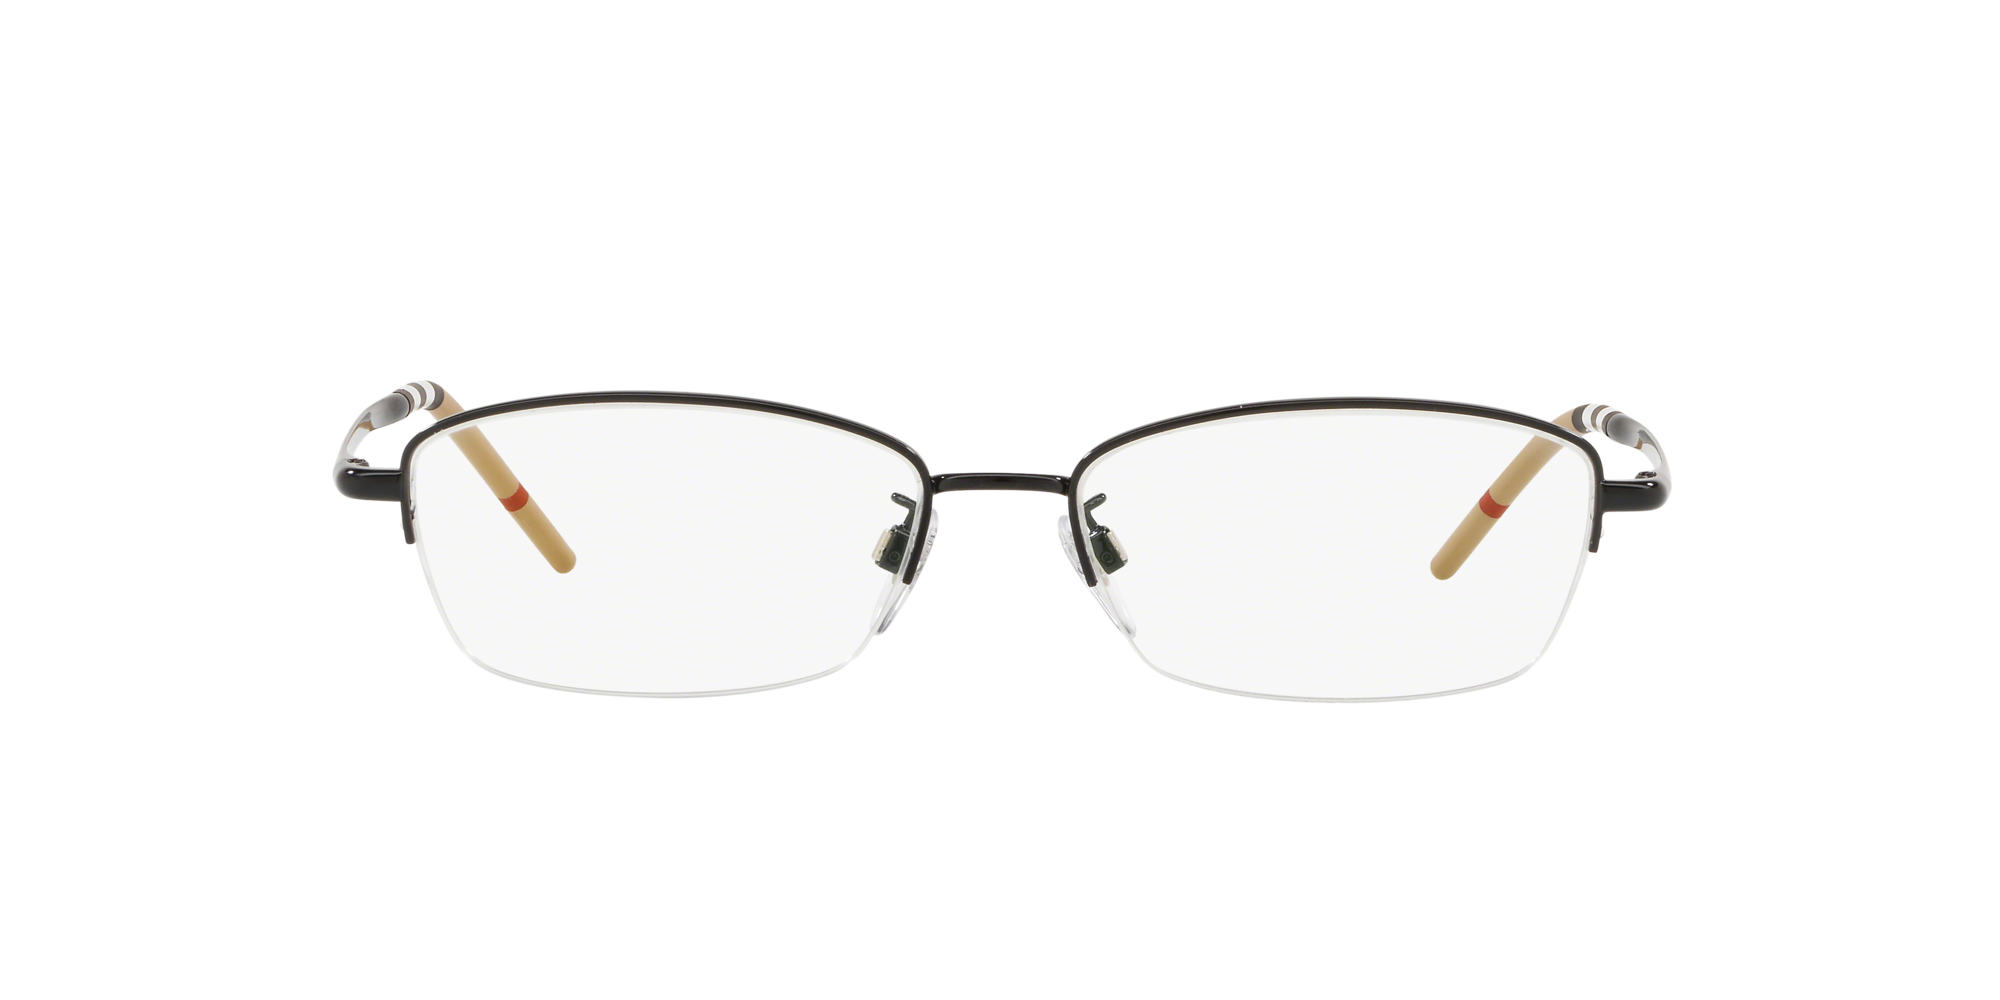 burberry glasses frames lenscrafters